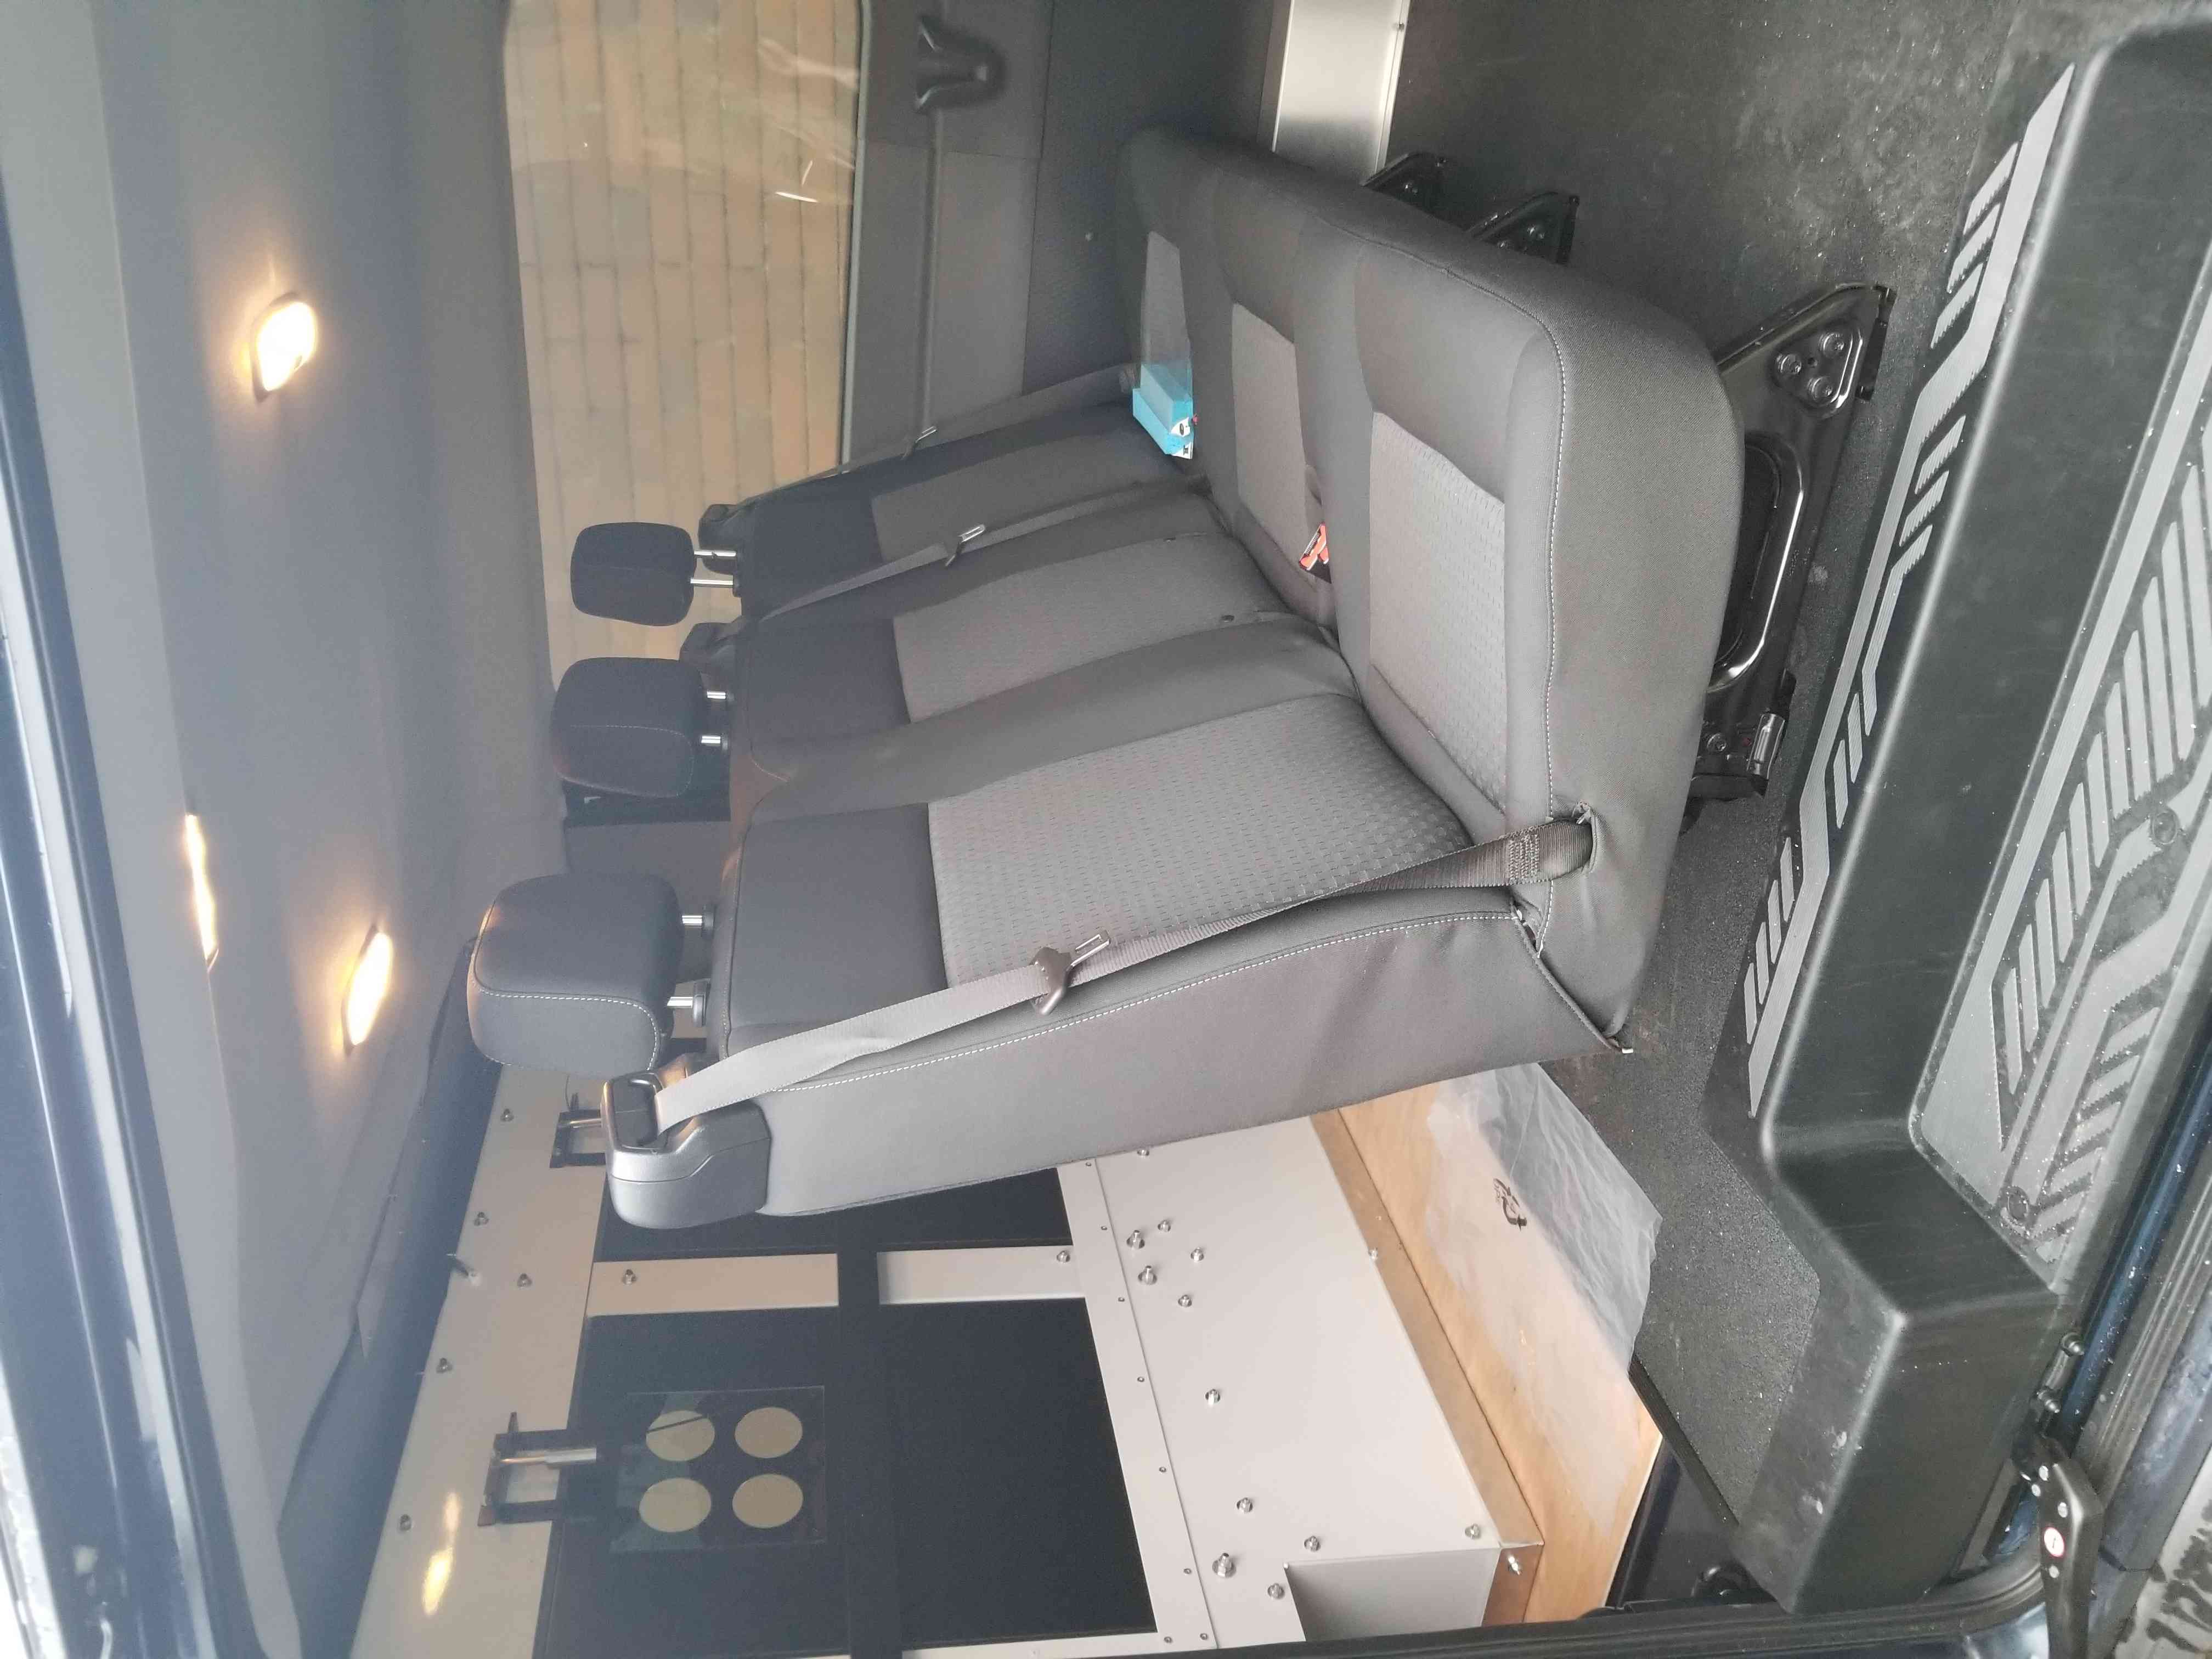 CSC prisoner transport vehicle – Rear passenger seats